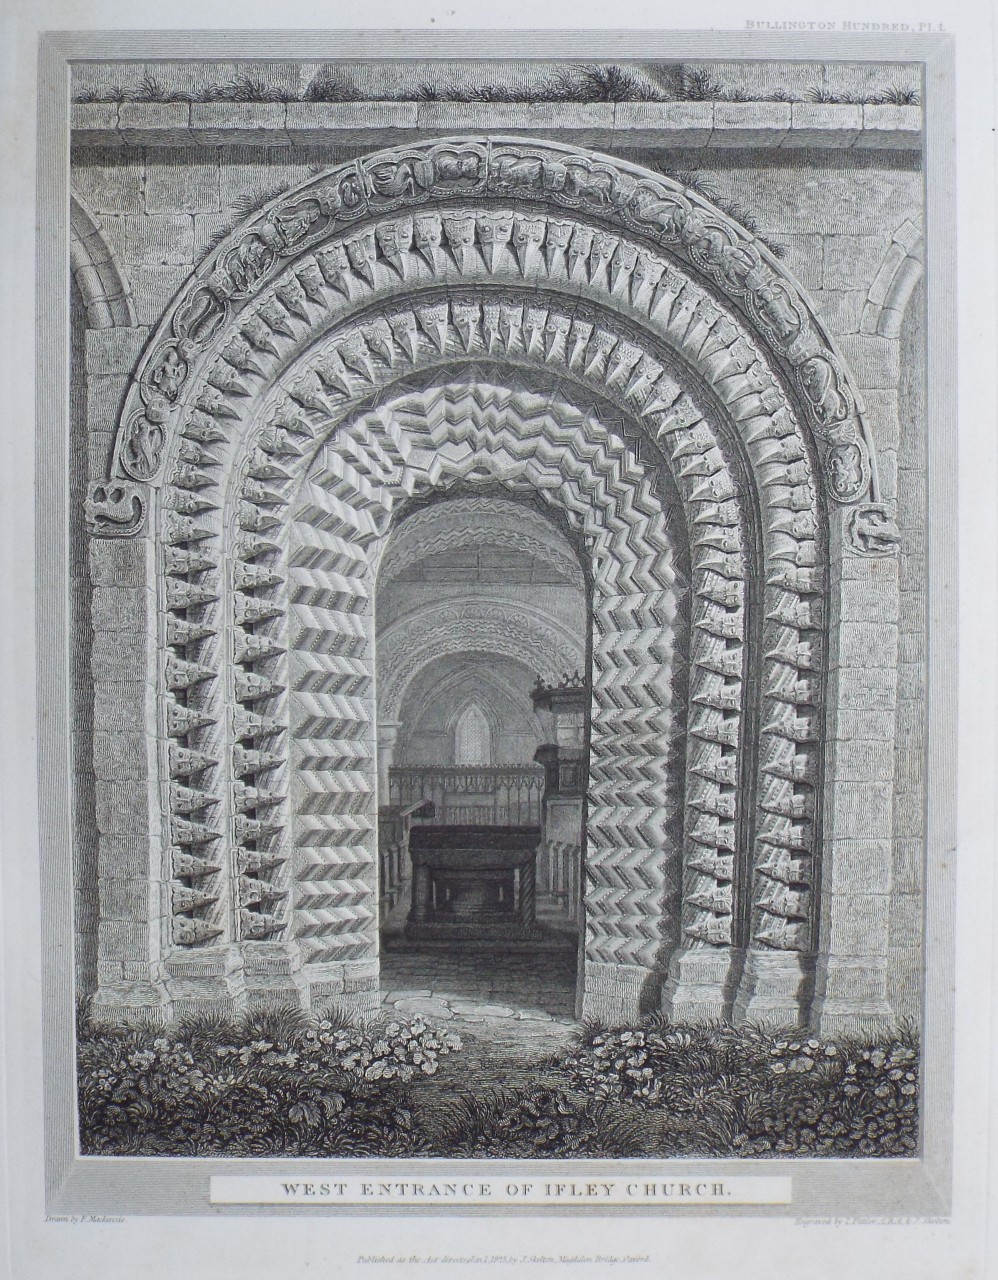 Print - West Entrance of Ifley Church. - Skelton